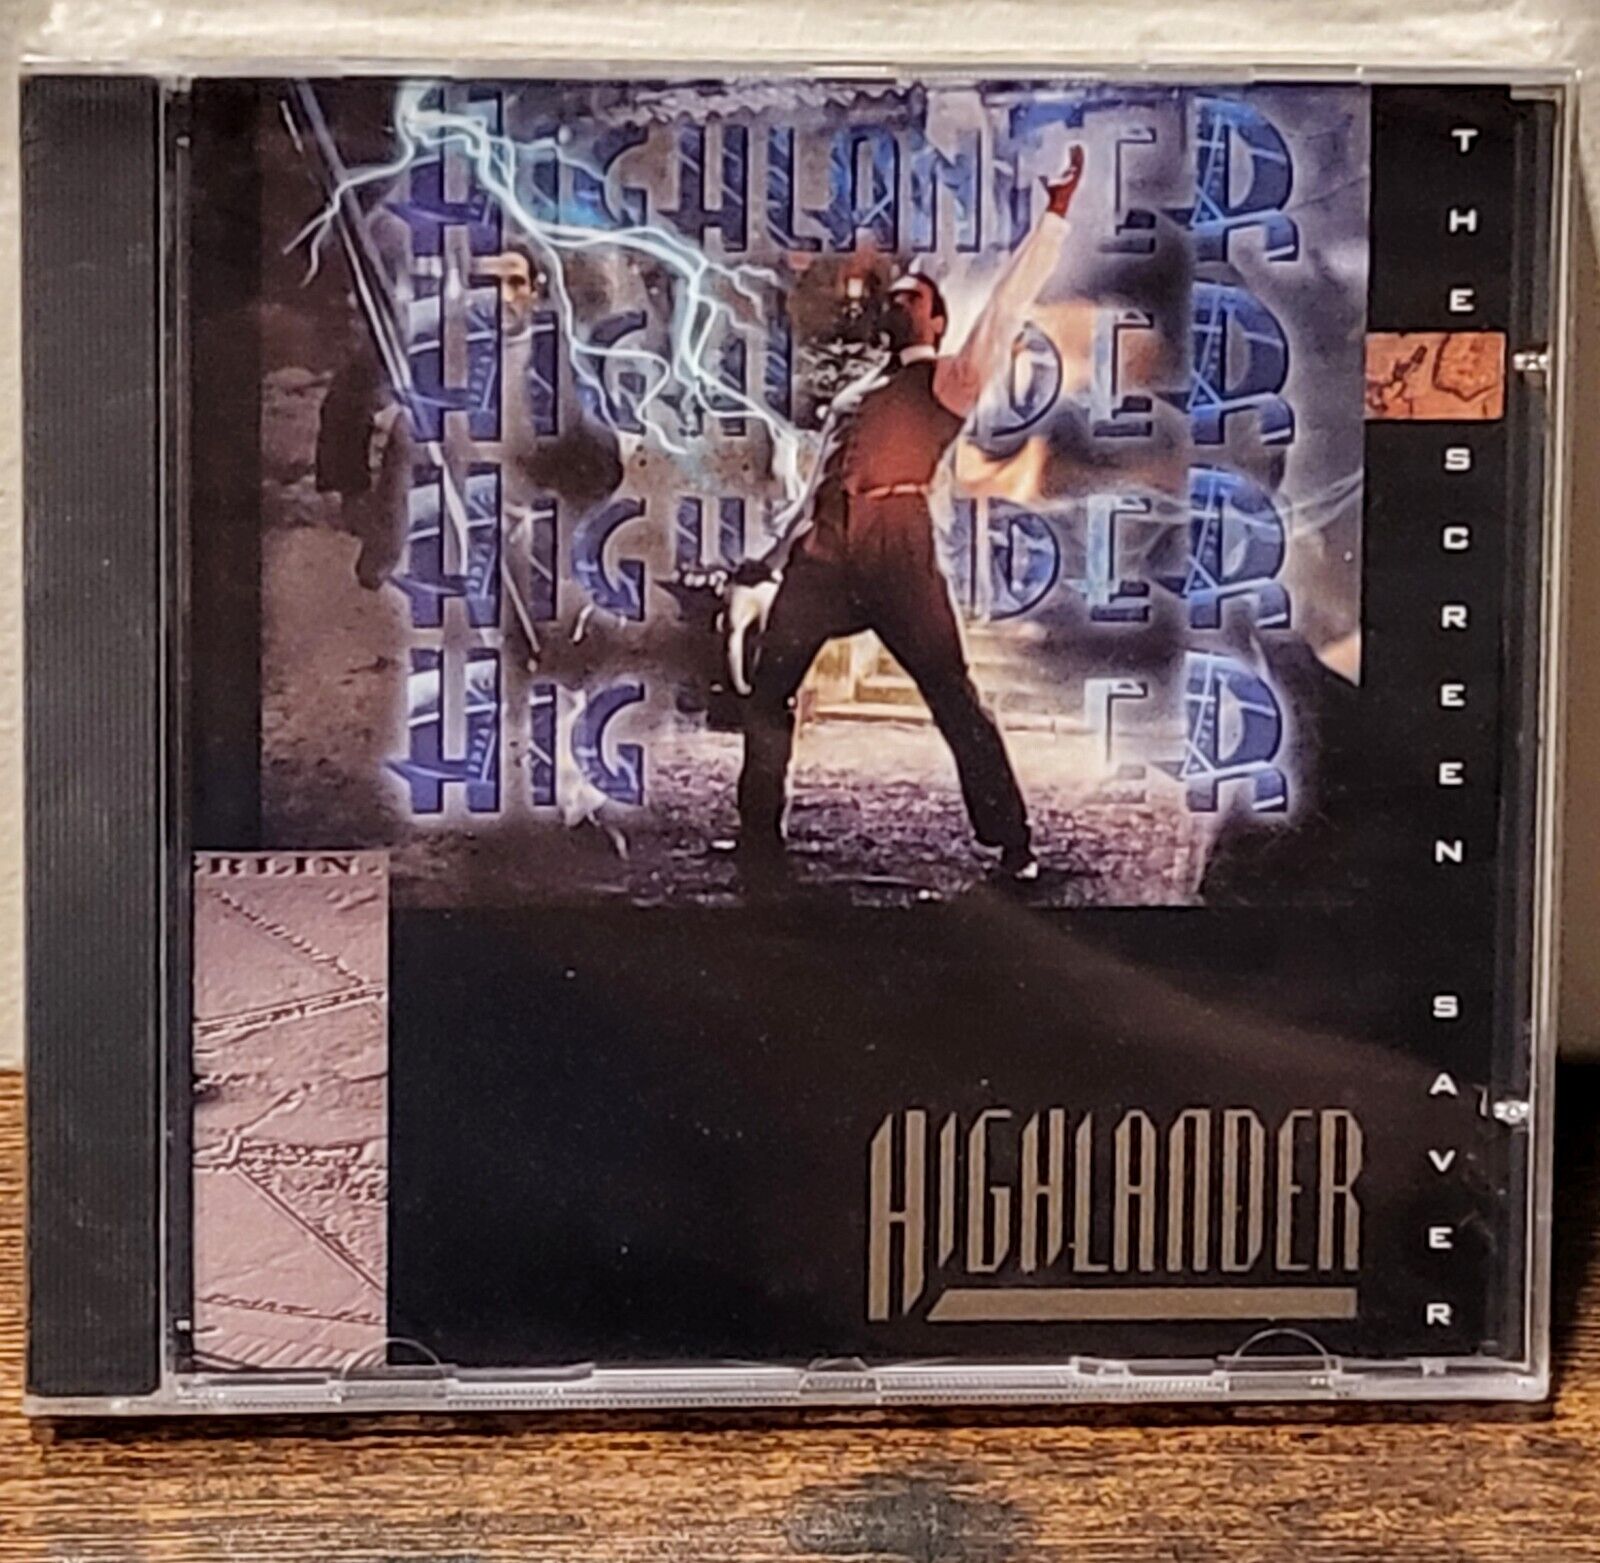 Highlander: The Screen Saver (CD, PC & Mac, 1996) BRAND NEW SEALED